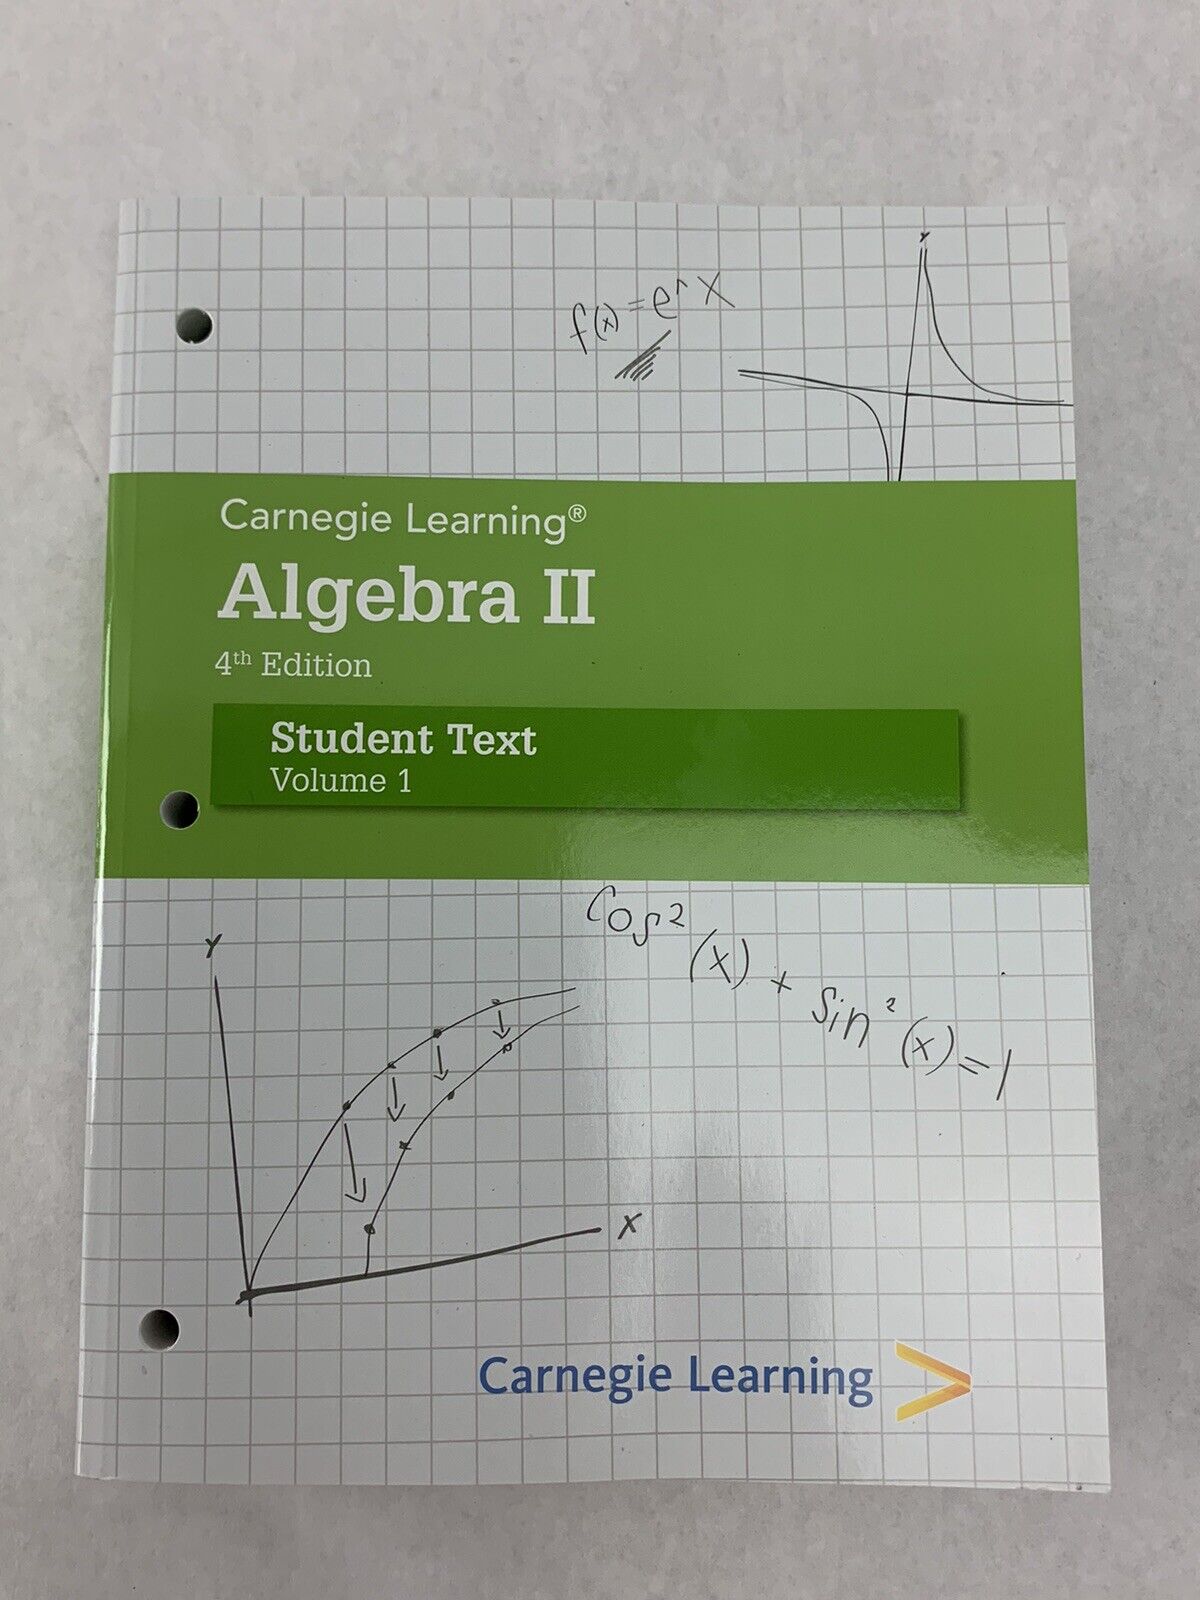 Carnegie Learning Algebra II Student Text Volume 1 4th Edition